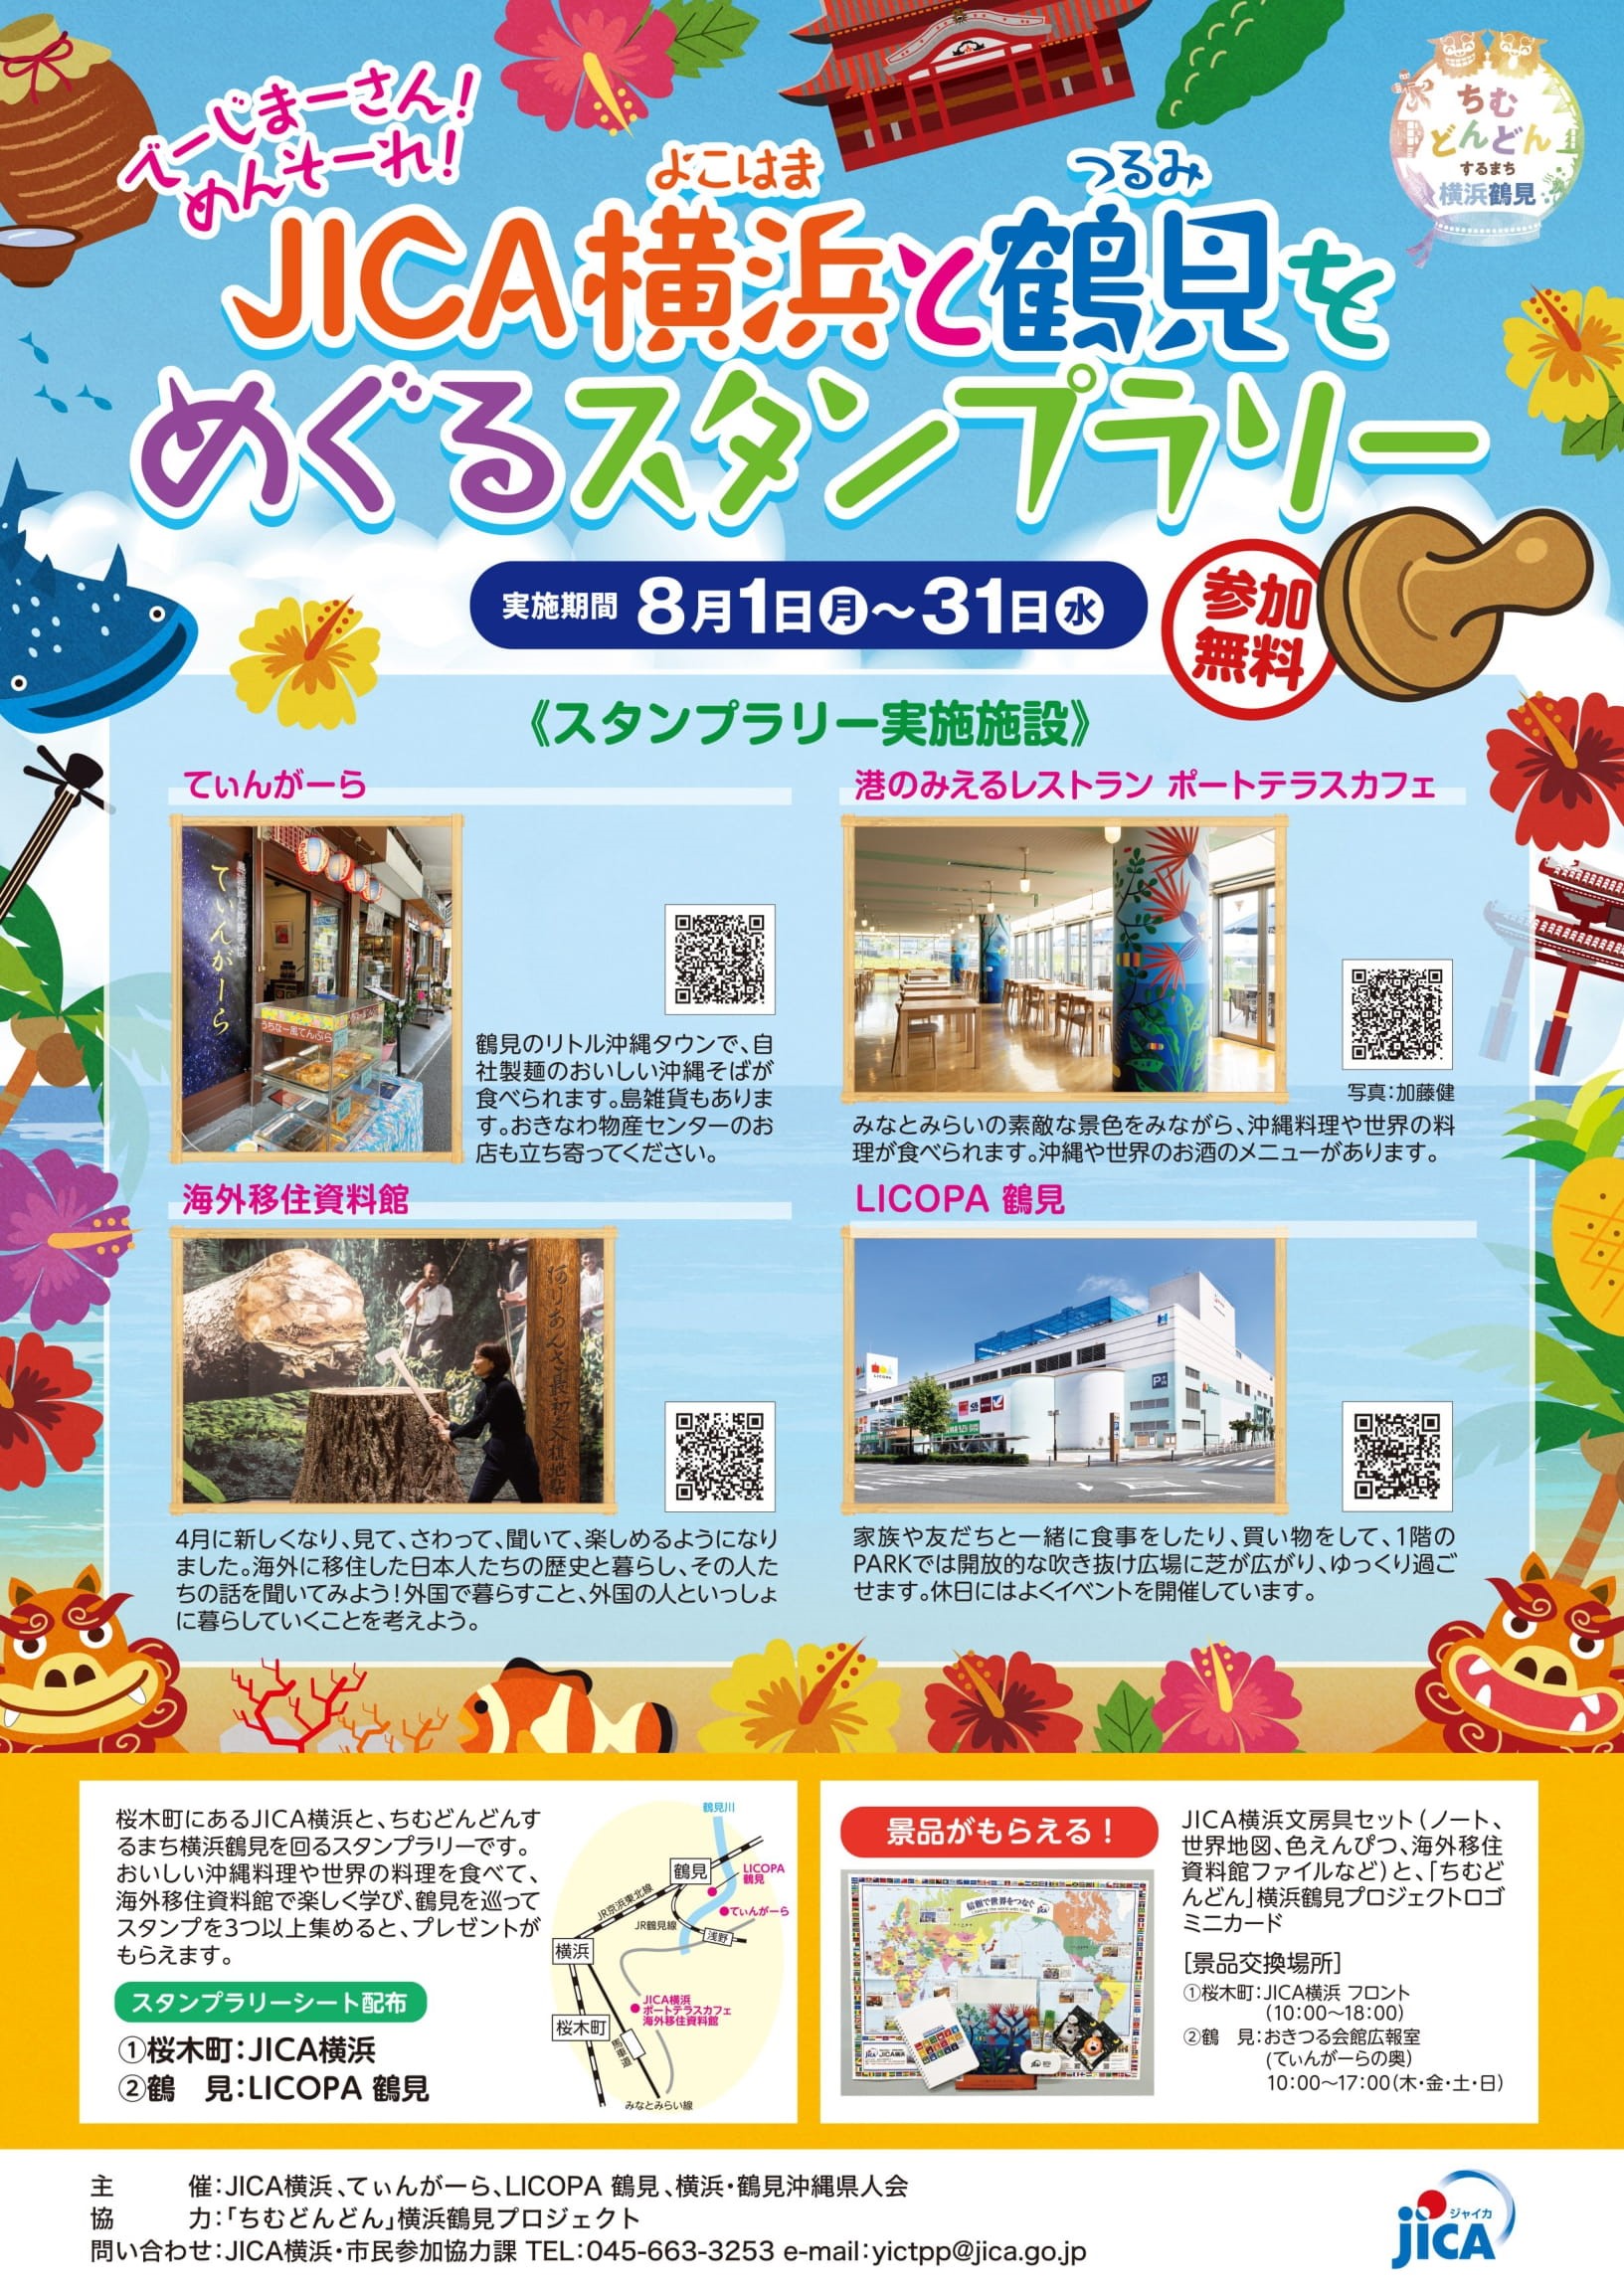 JICA横浜と鶴見をめぐるスタンプラリー 